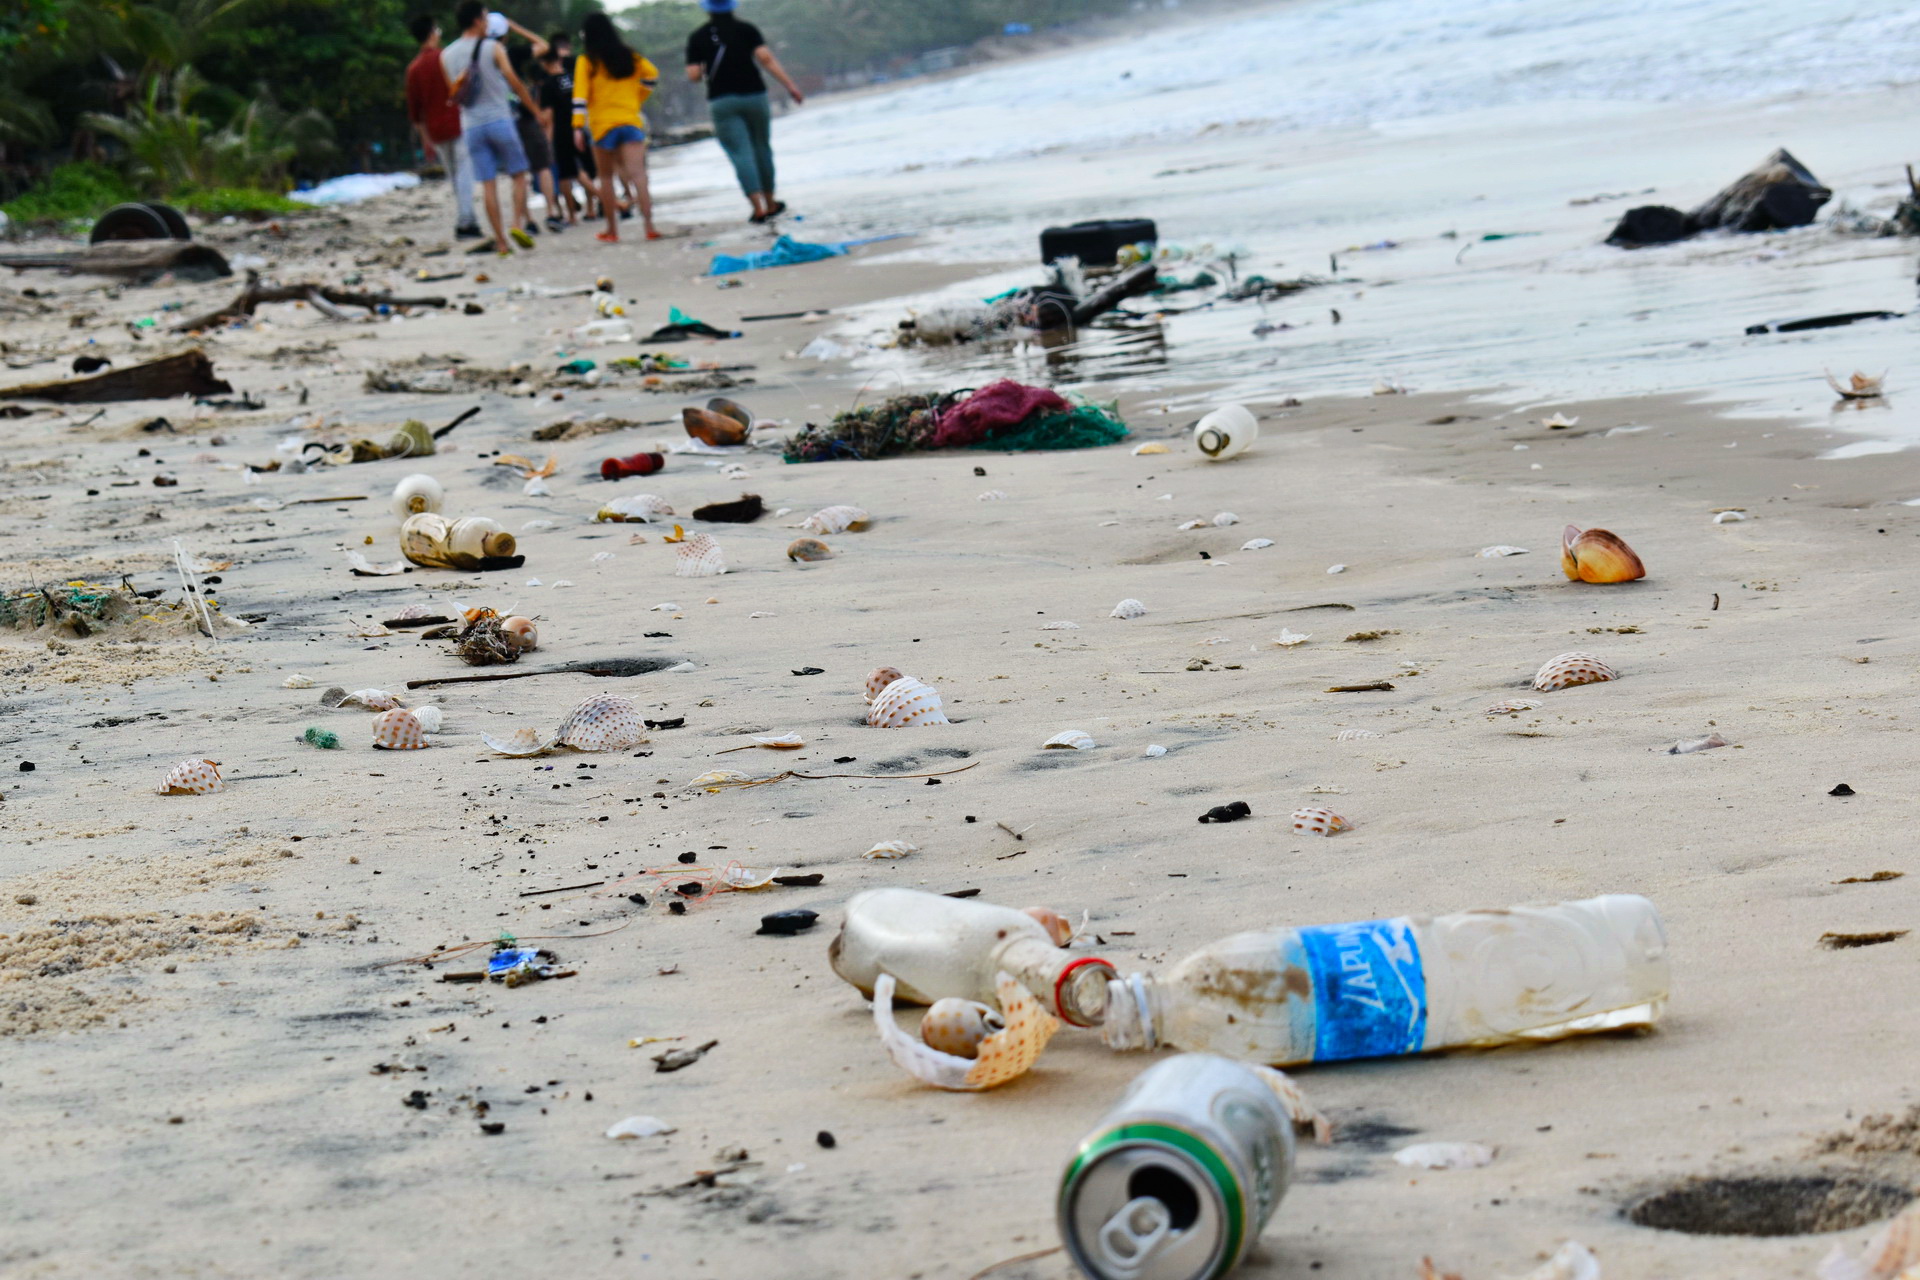 Once-pristine Vietnamese coastline littered with trash